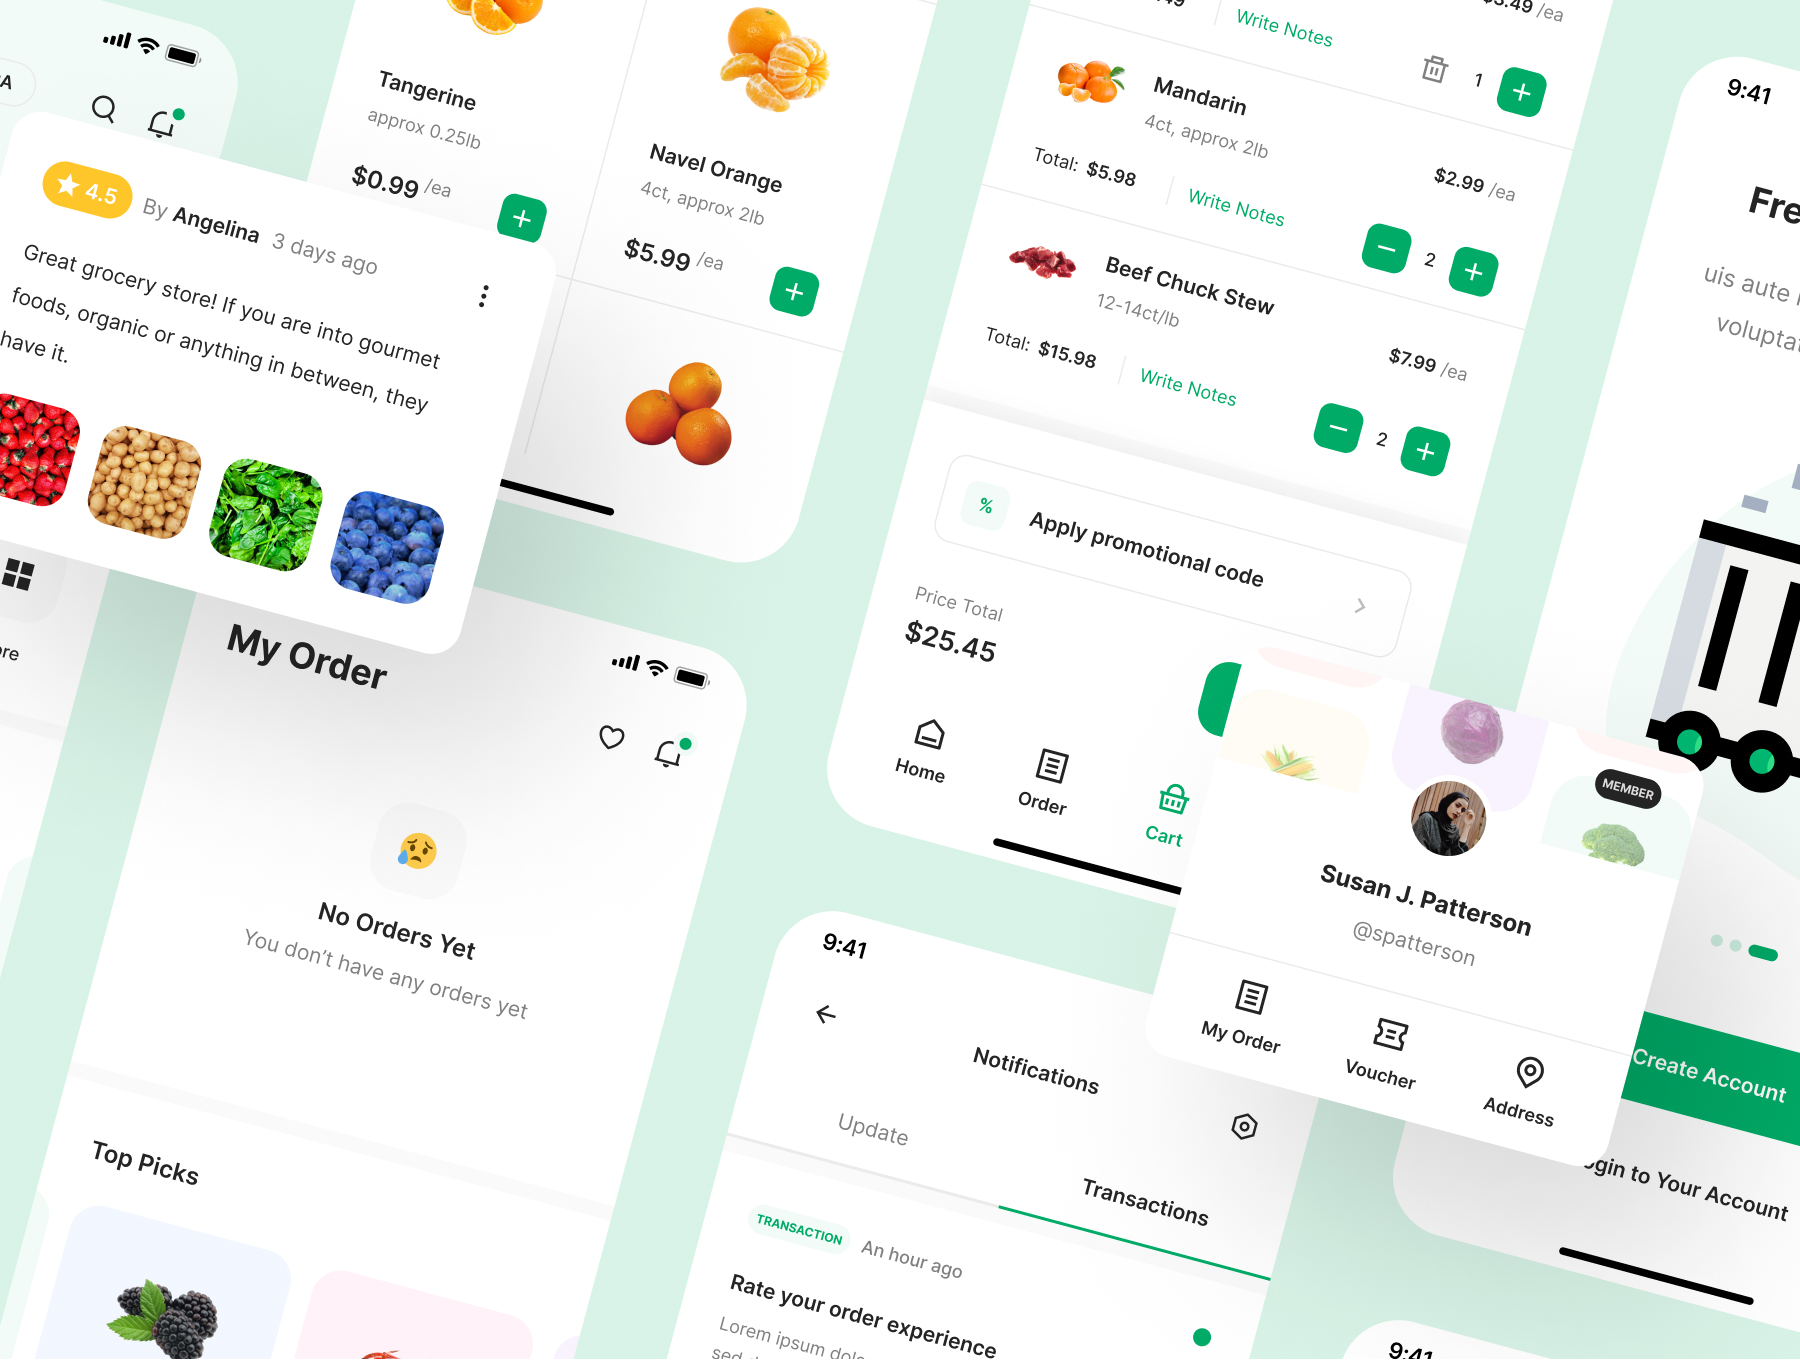 Growcery - Grocery App UI Kit